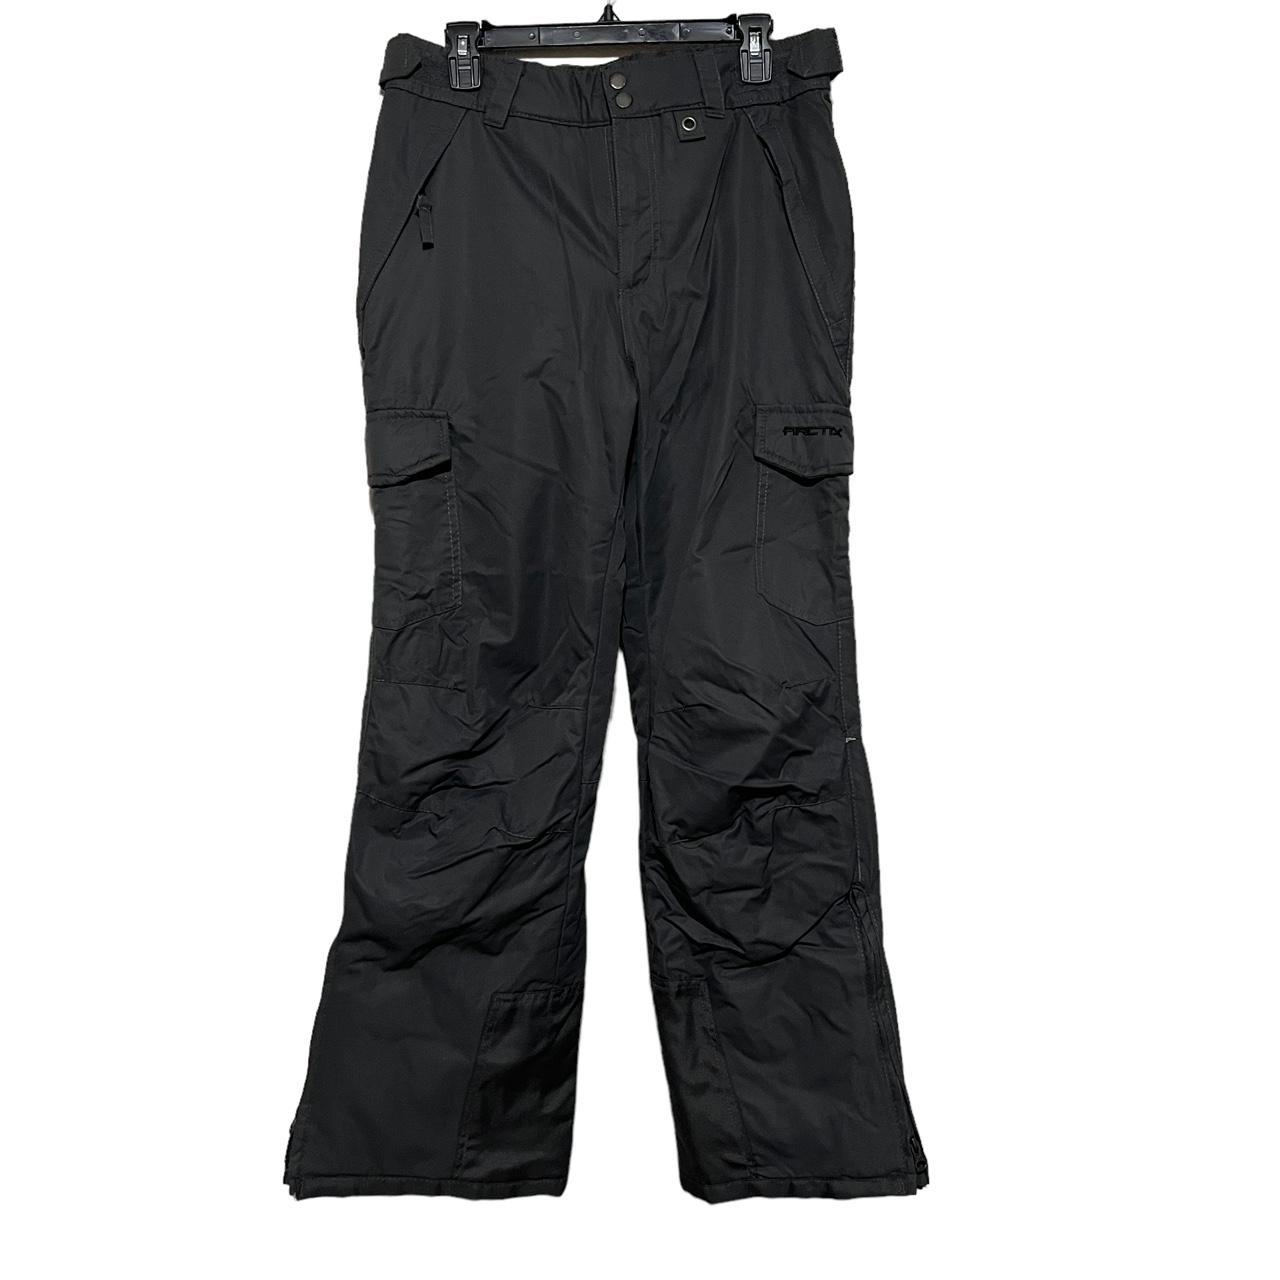 Gray Snow Pants, Brand: Arctix, Size: M, Style